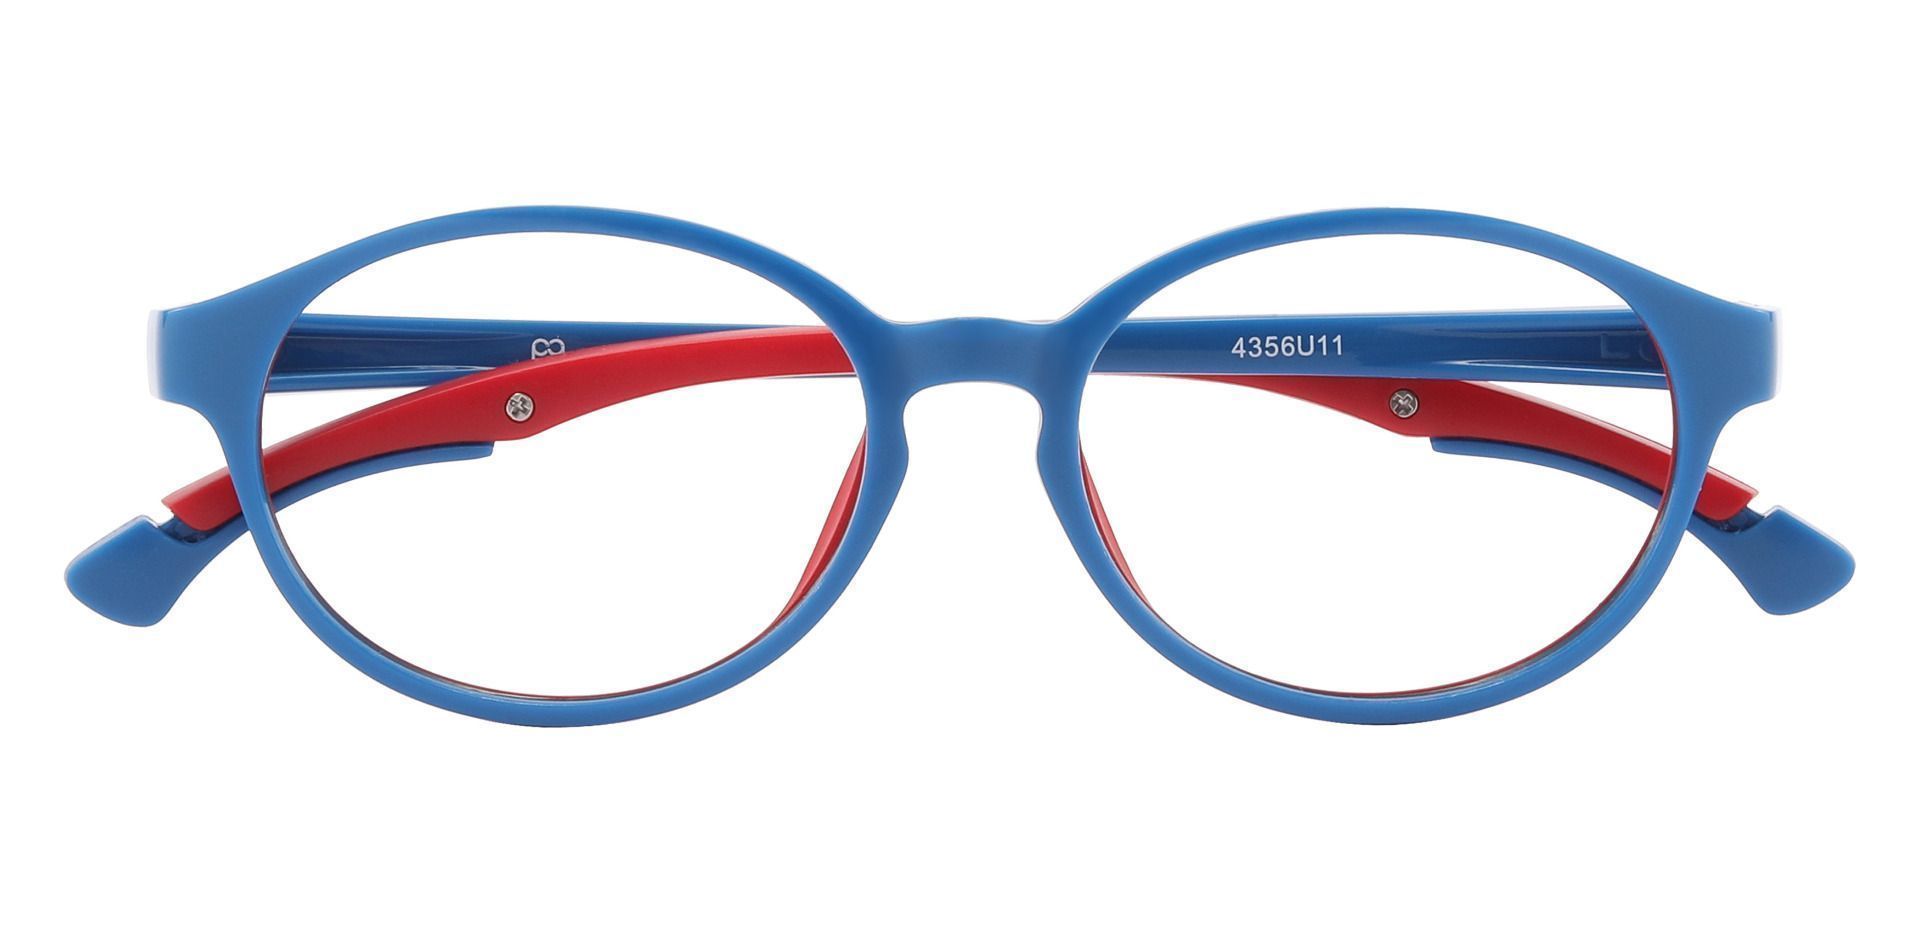 Quest Oval Prescription Glasses - Blue